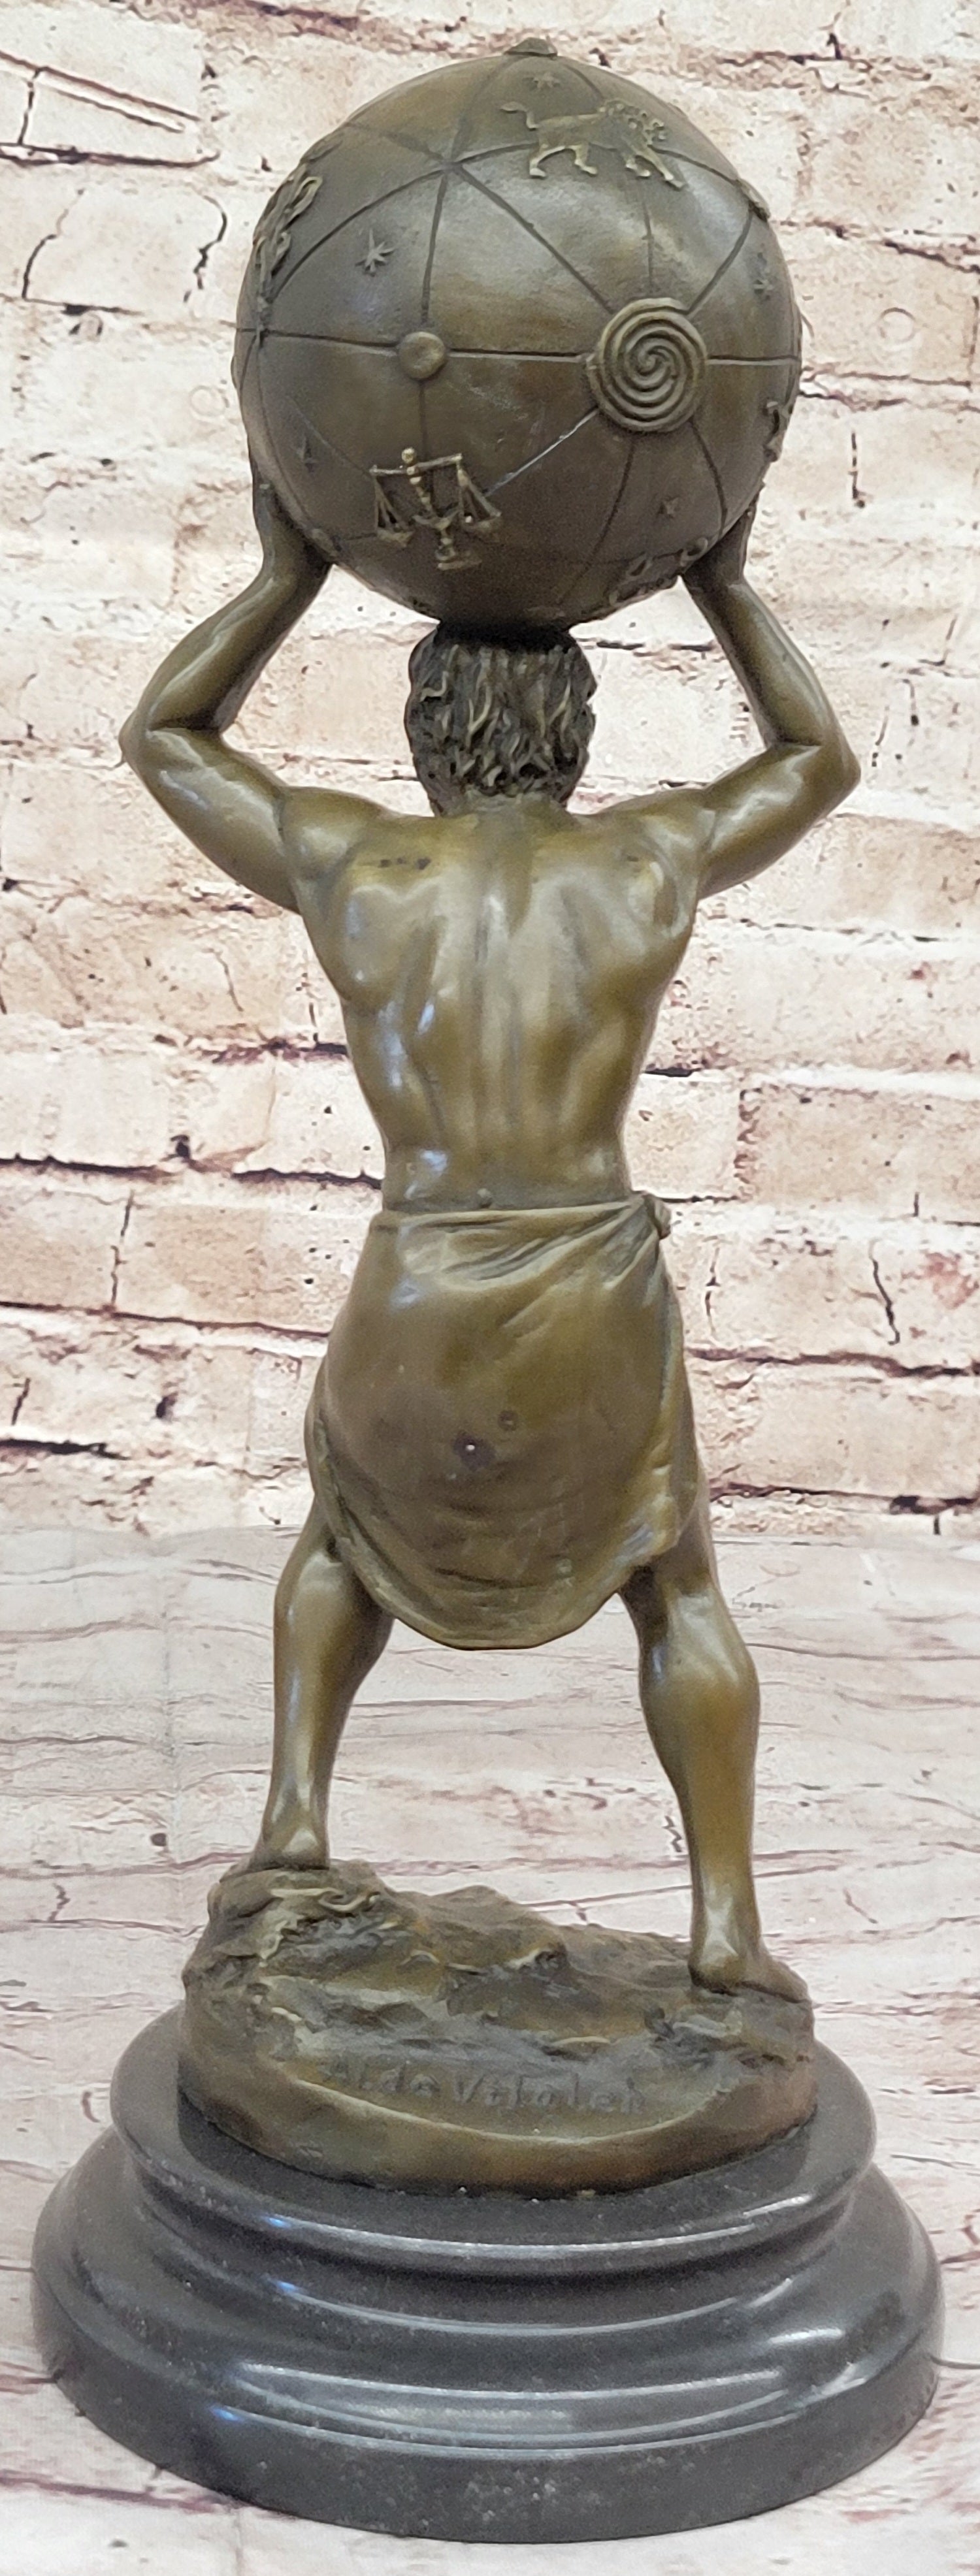 Decorative Greek Titan Atlas Statue With Celestial Spheres Globe Sculpture  Gift